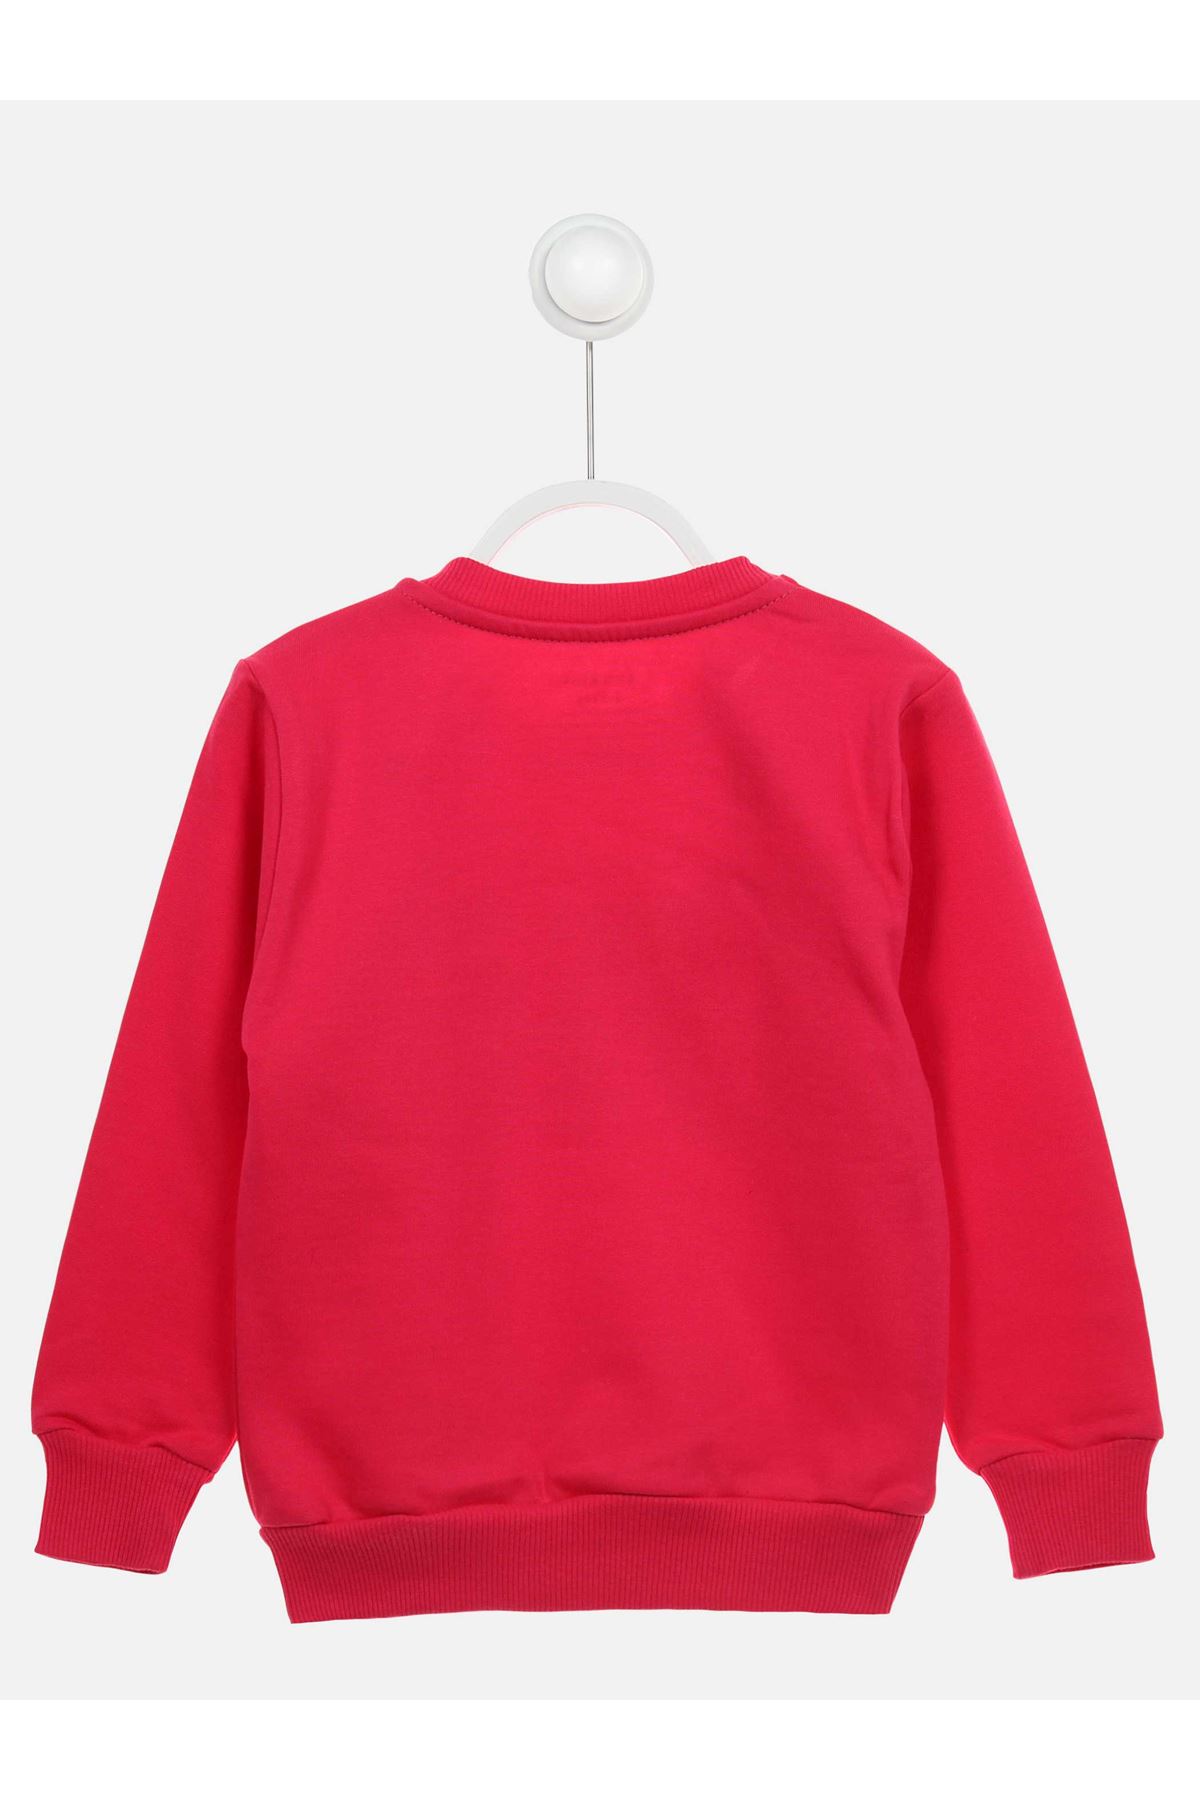 Pomegranate Flower Seasonal Girl Child Sweatshirt